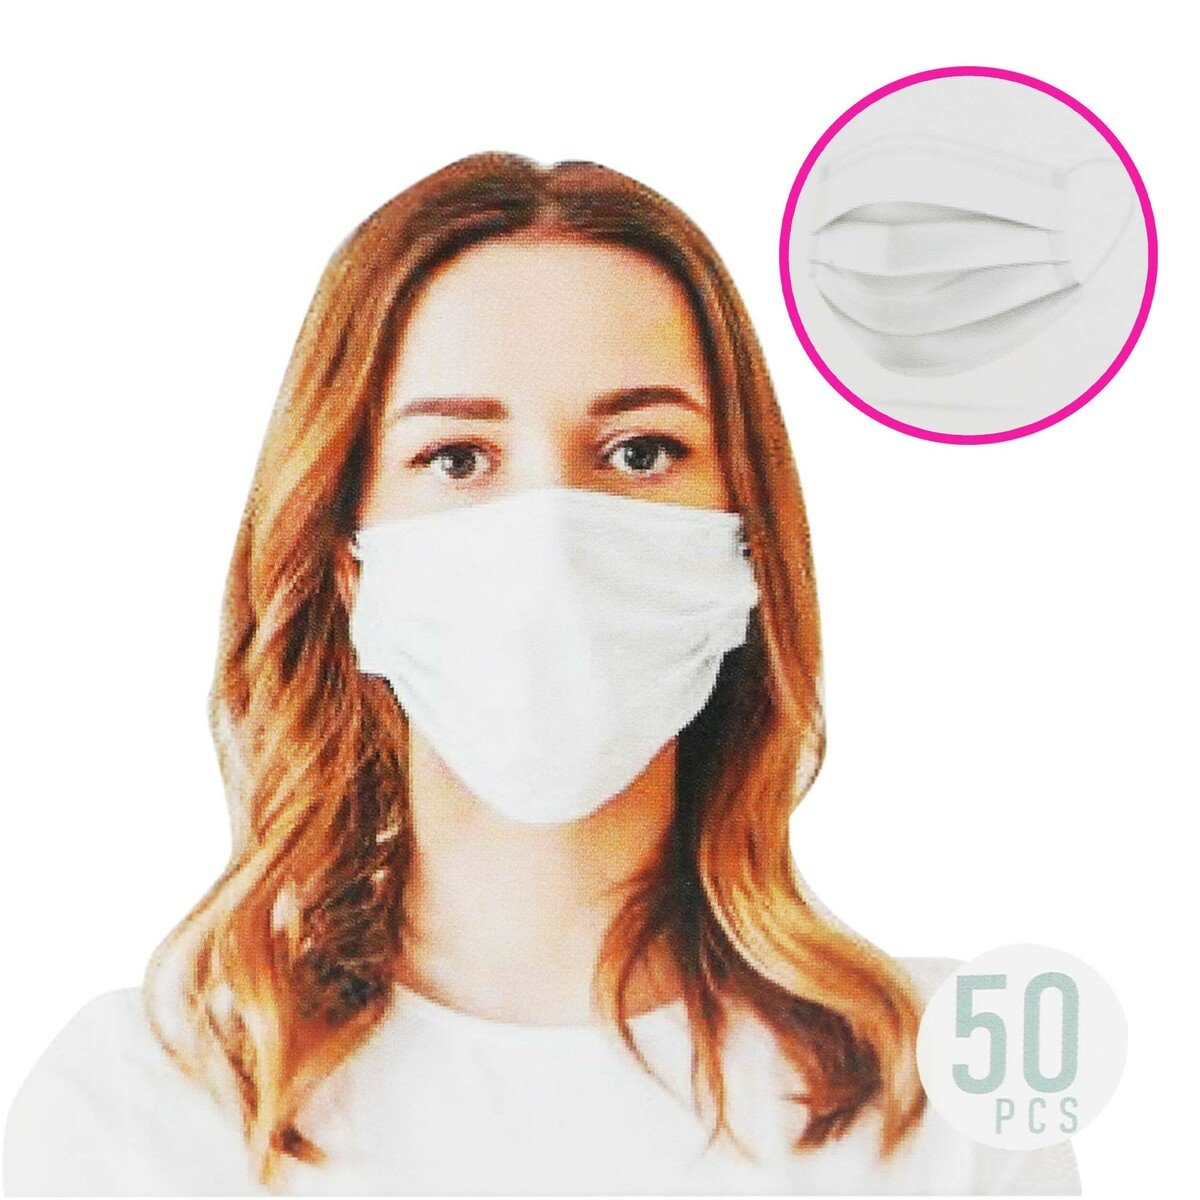 Protect Plus 3Layer Disposable Face Mask White 50pcs